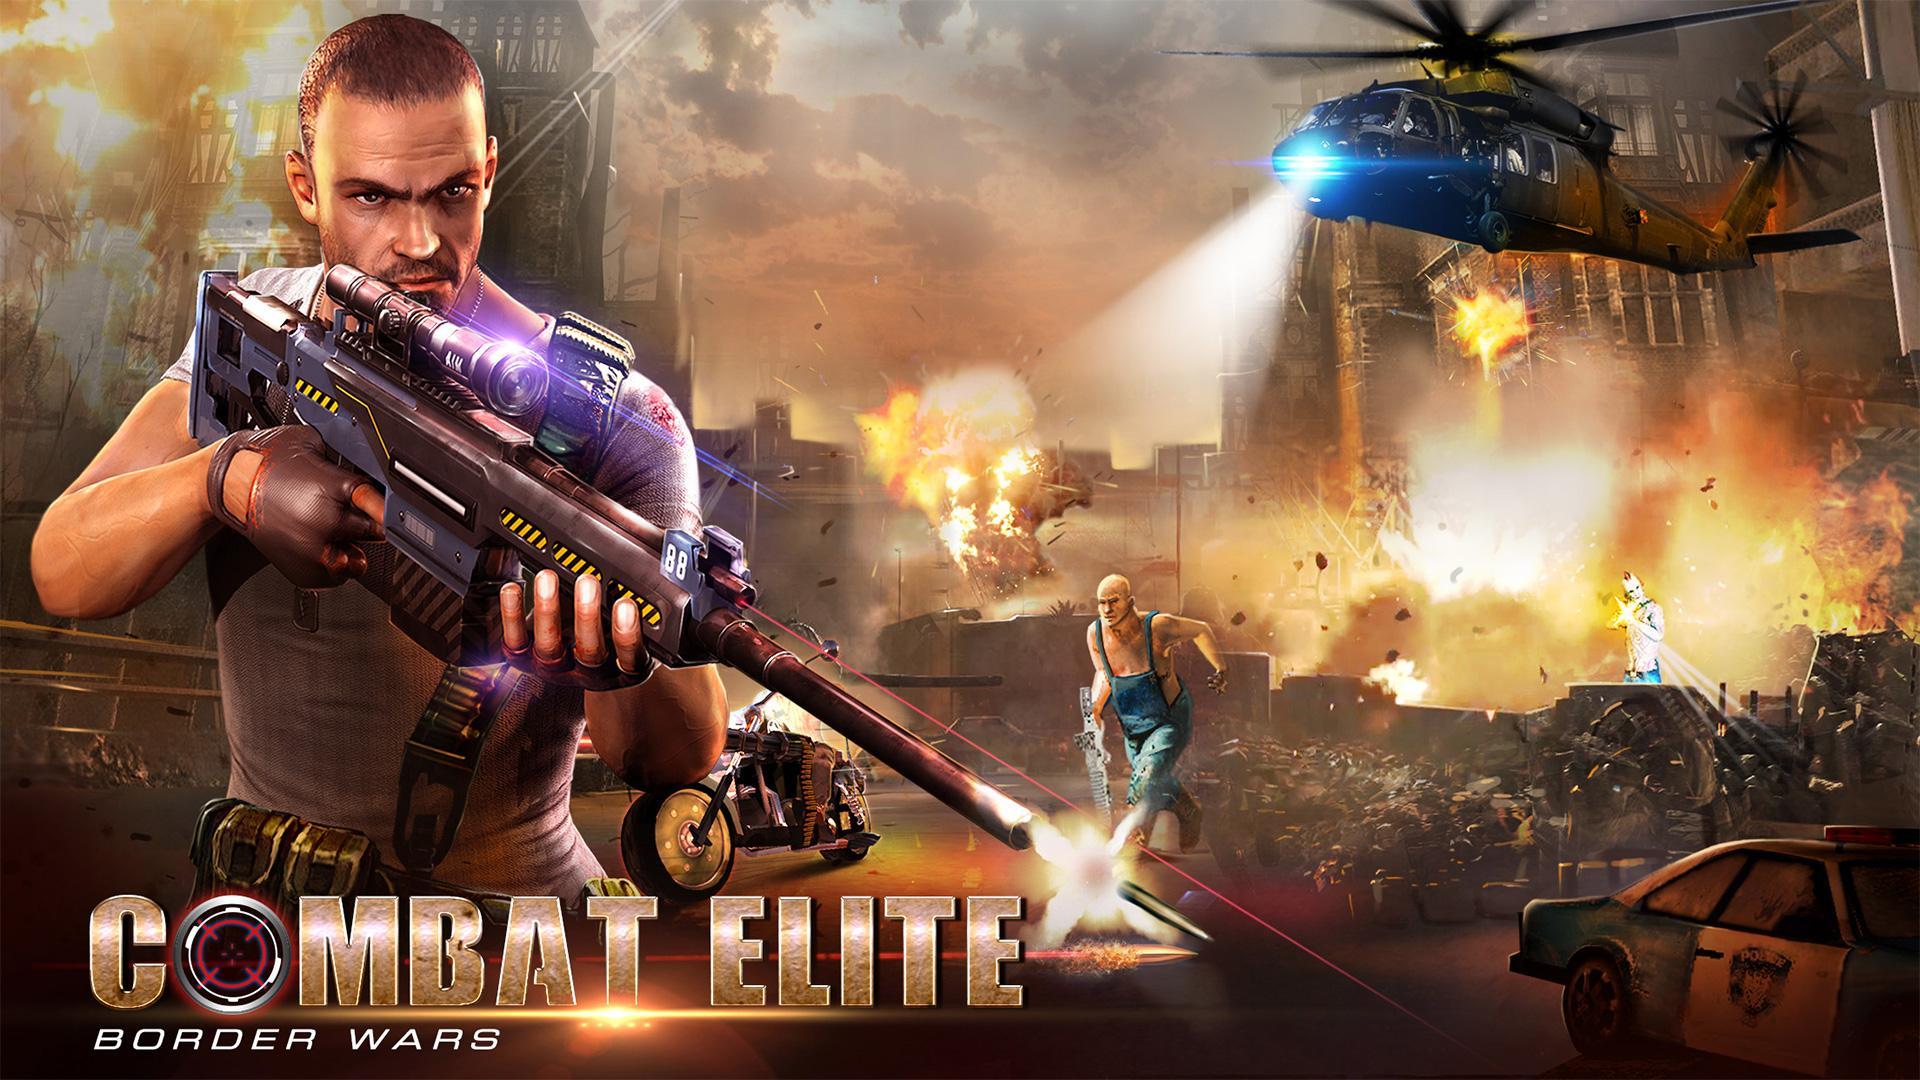 Screenshot 1 of Combat Elite: สงครามชายแดน 1.0.124